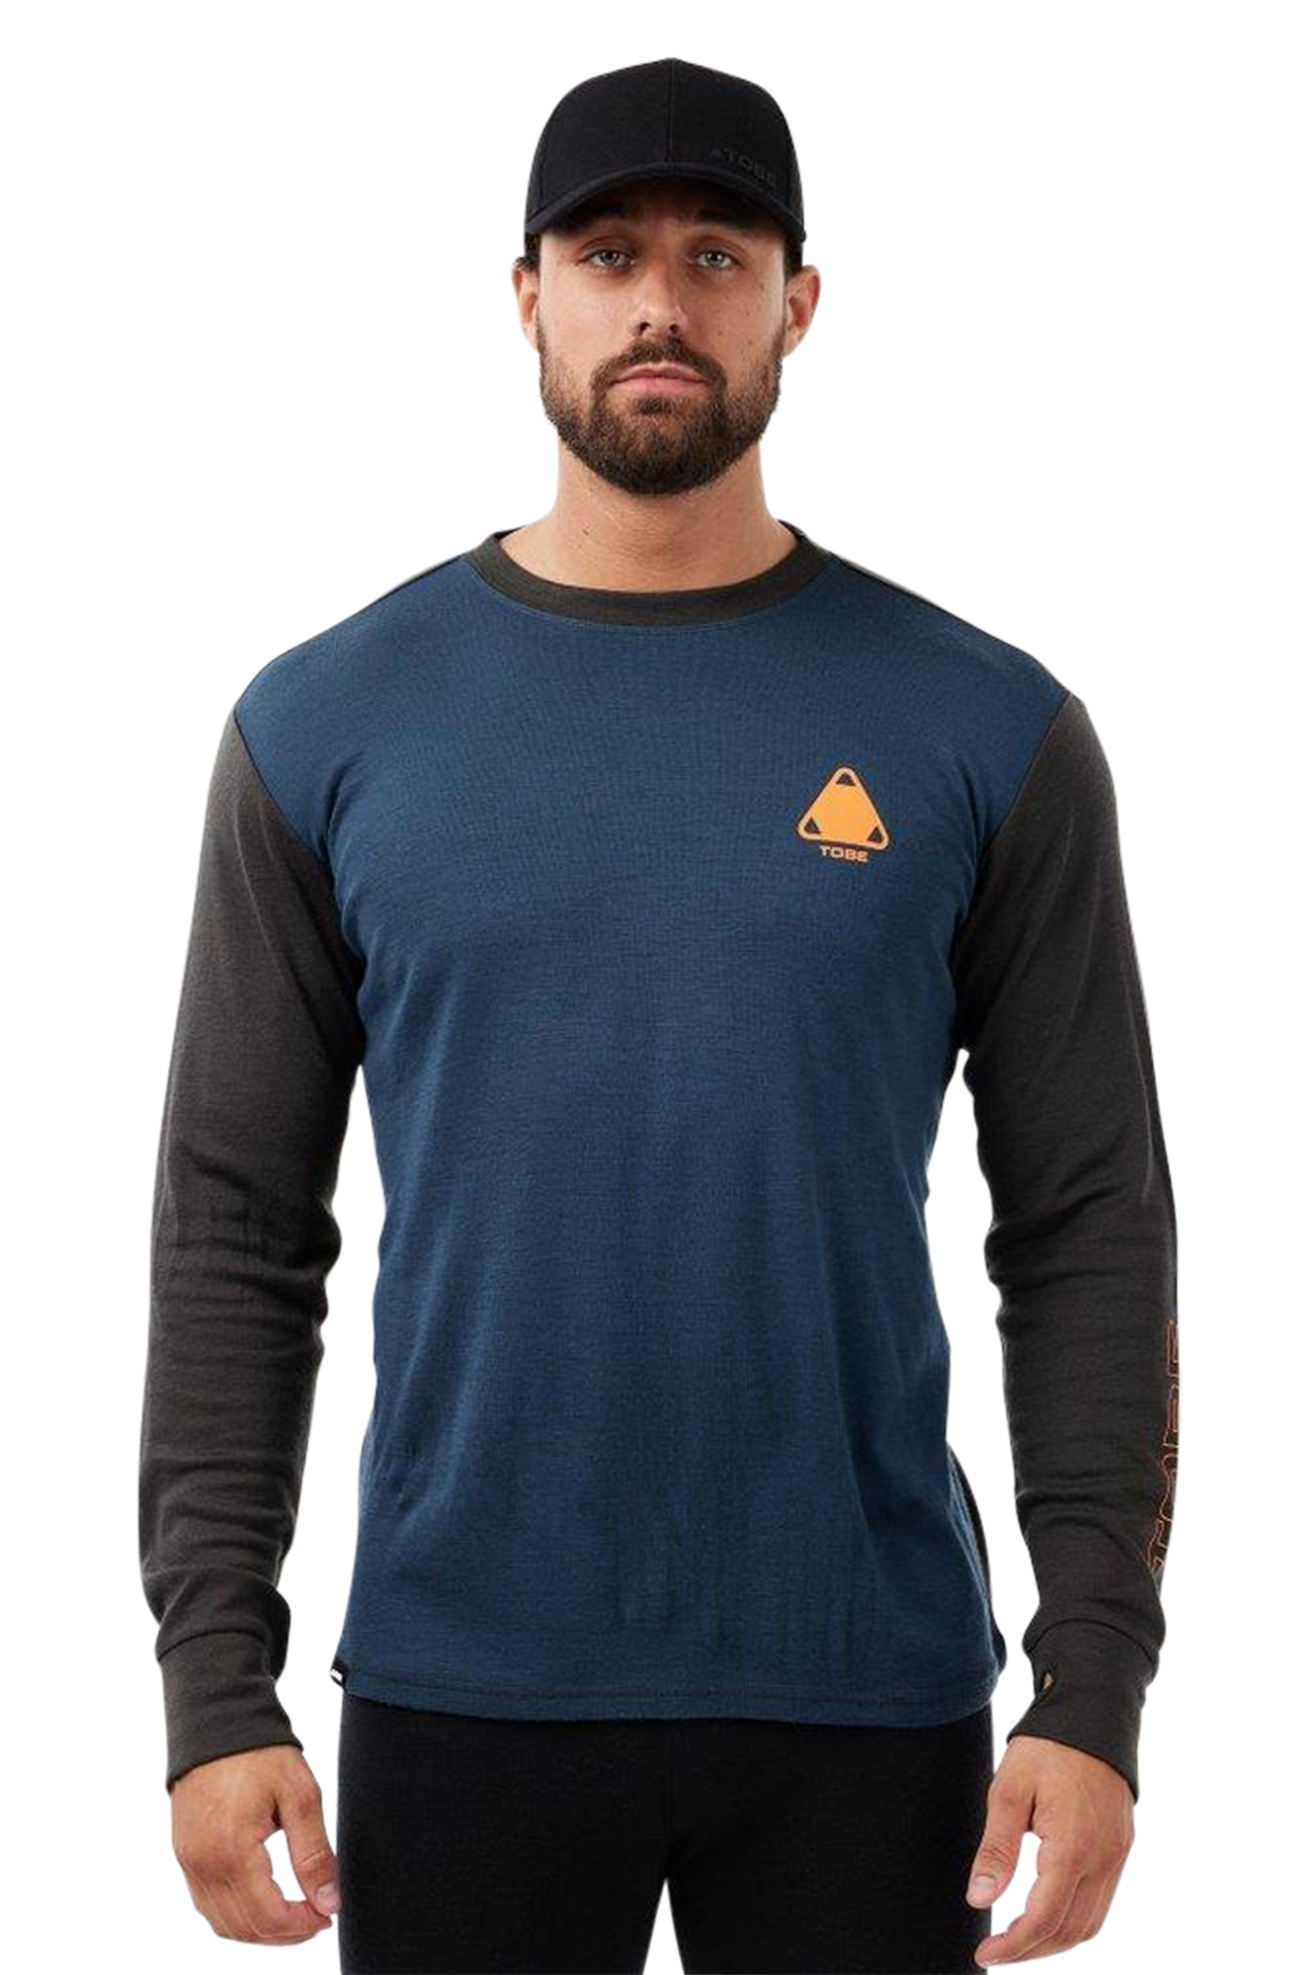 TOBE Outerwear Camiseta Capa Base de Merino TOBE Ferox Azul Marino Medianoche